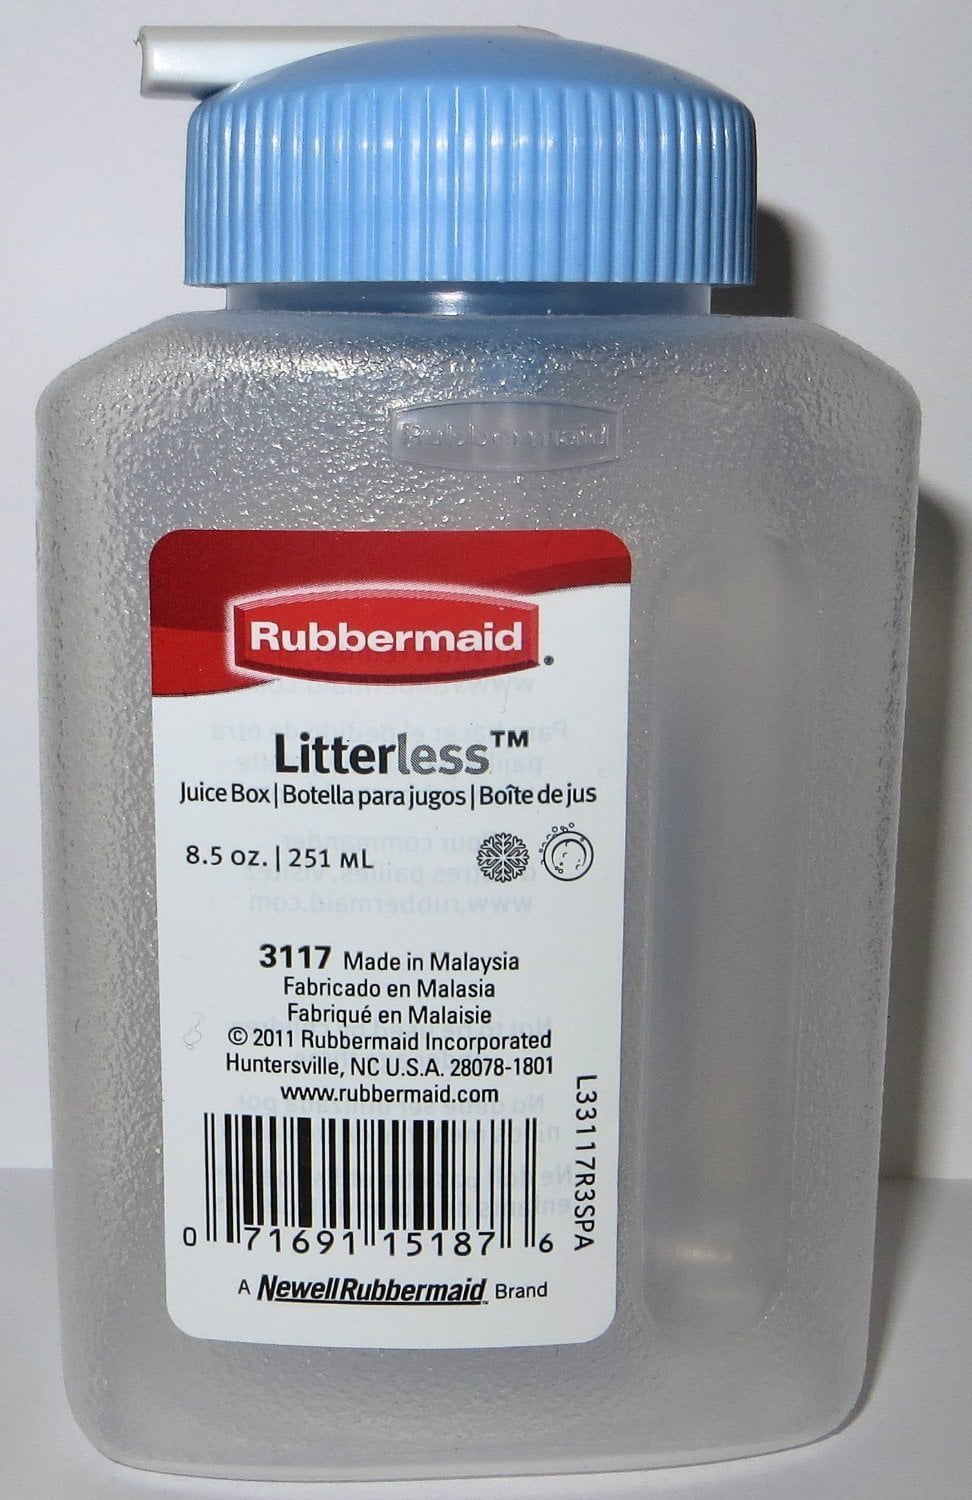 Rubbermaid Litterless Juice Box Reviews –